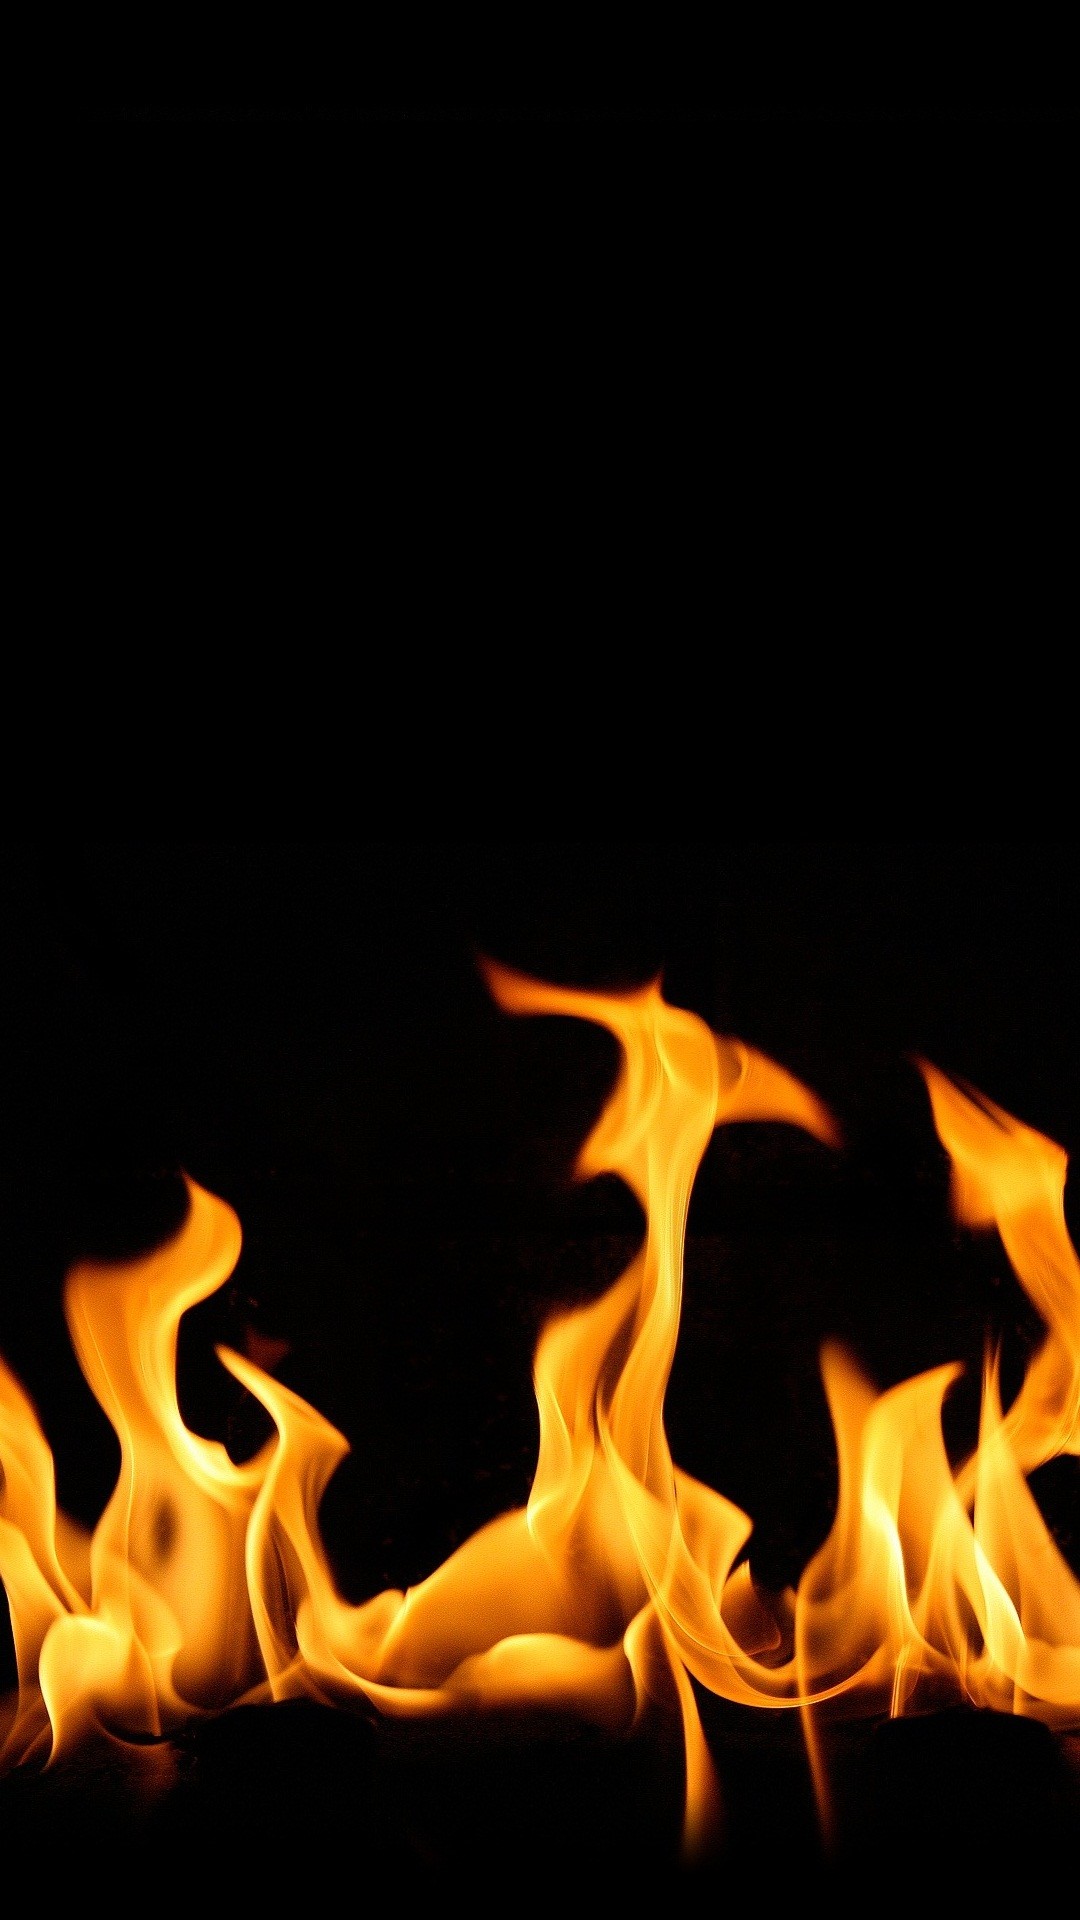 1080x1920 Fire Flame iPhone Wallpaper resolution 